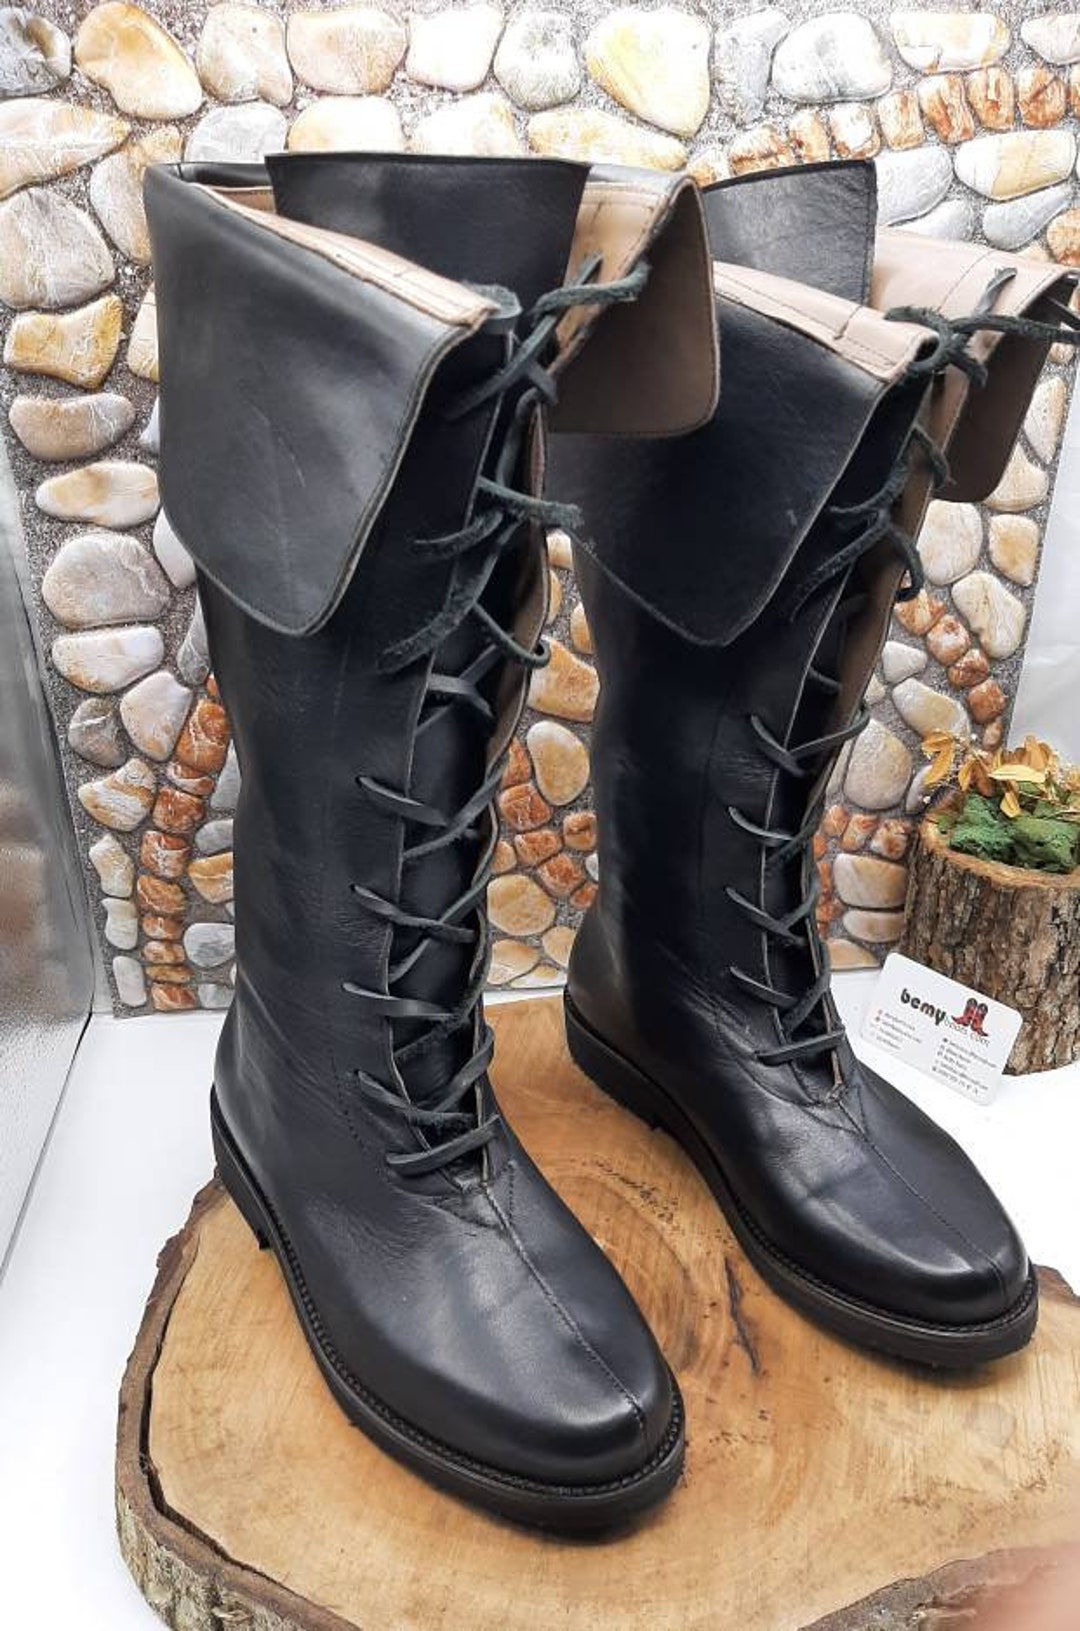 Schoenen Herenschoenen Laarzen Viking Boots 4 Toggle Boots Mens Size 10 Natural  Mismatched Leather #16 